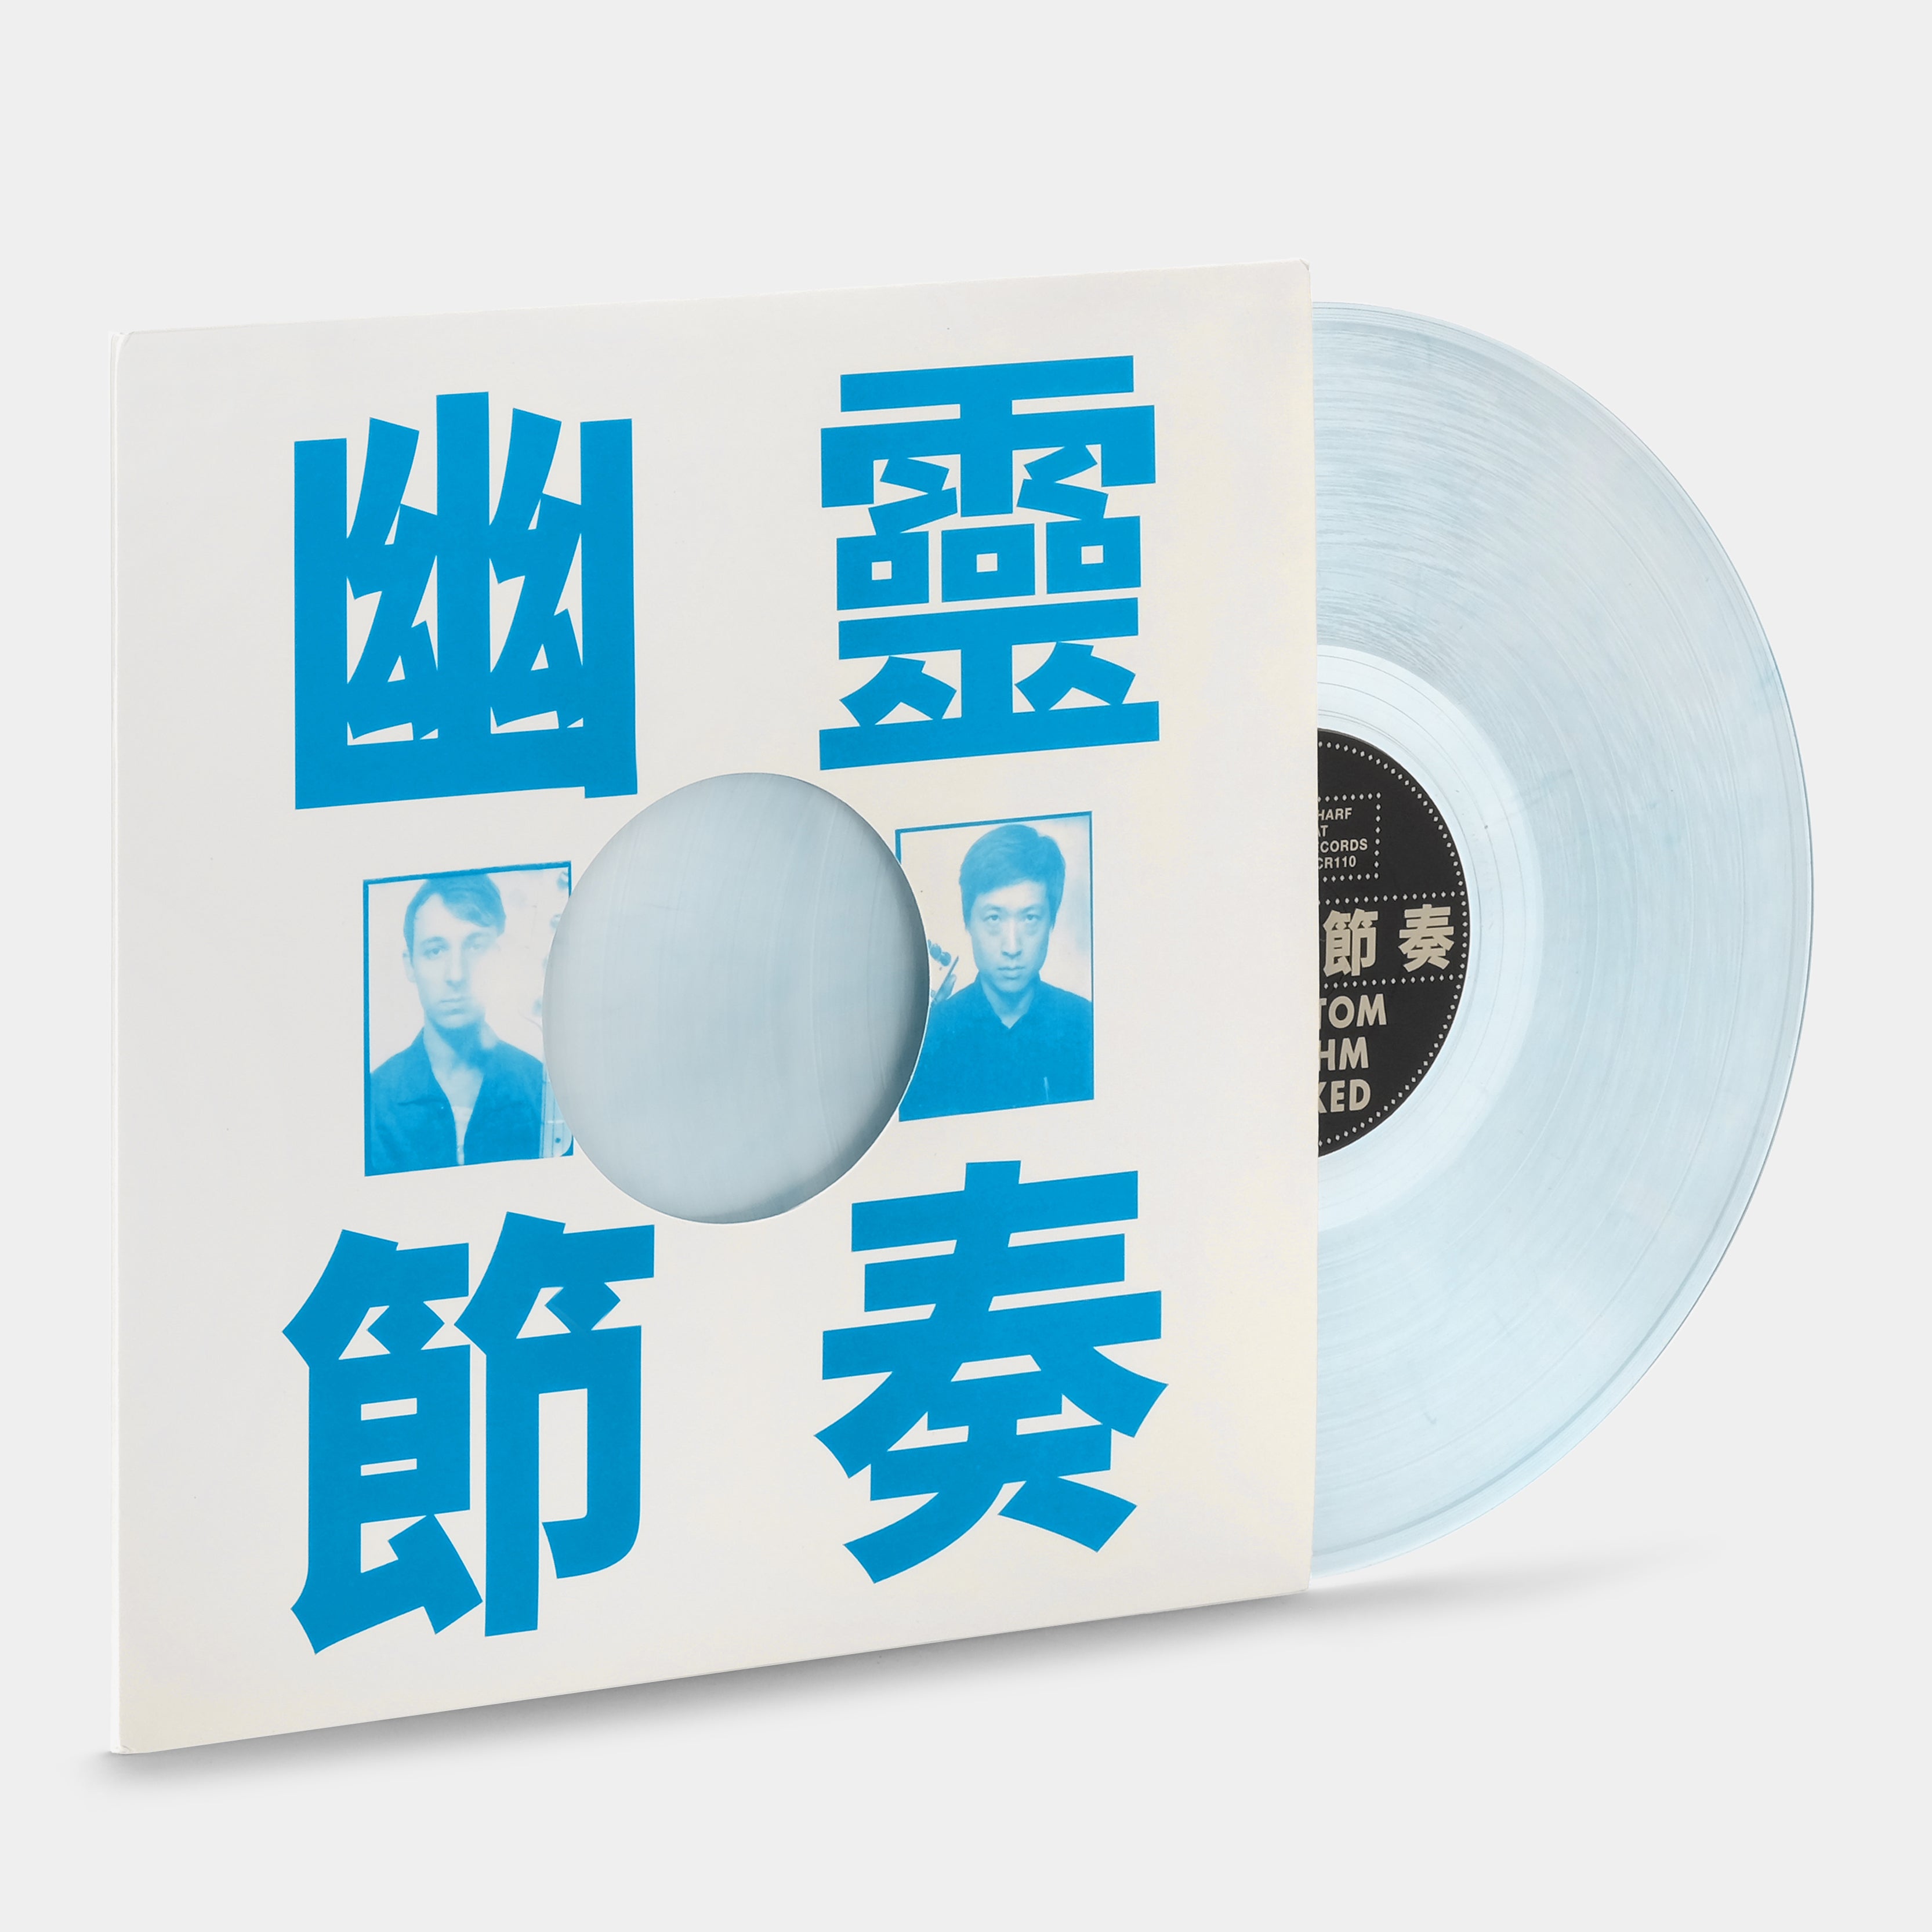 Gong Gong Gong 工工工 - Phantom Rhythm Remixed 幽靈節奏 (Indie Exclusive) LP Clear Blue Vinyl Record